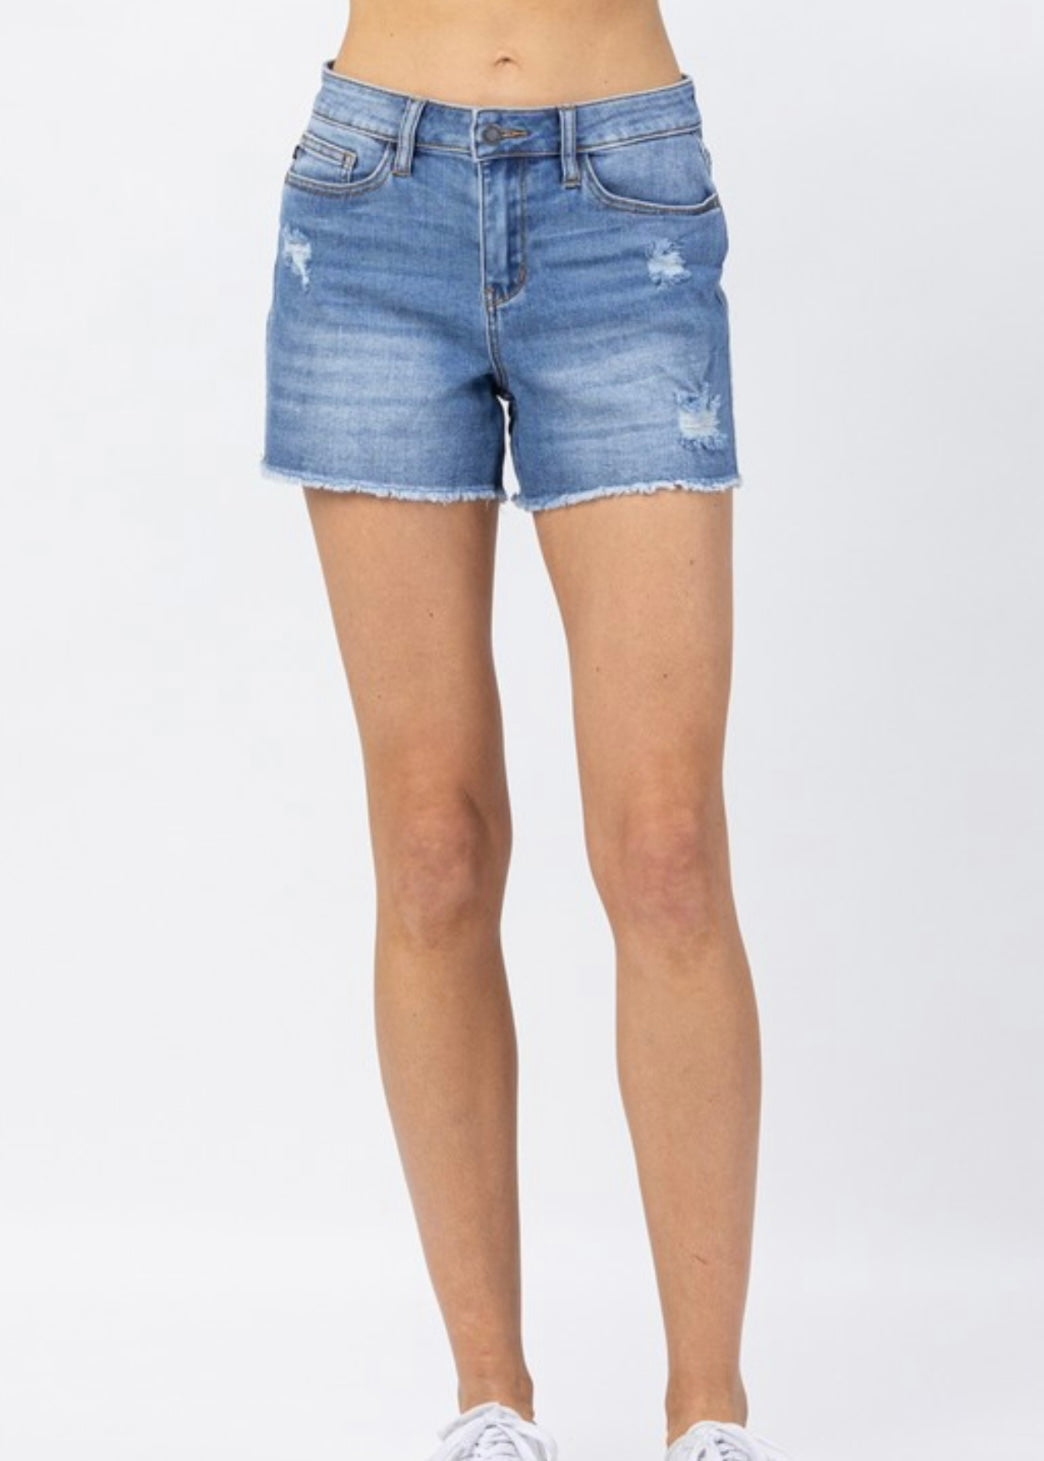 Brada Curvy Girl Denim Frayed Hem Shorts 1XL-3XL